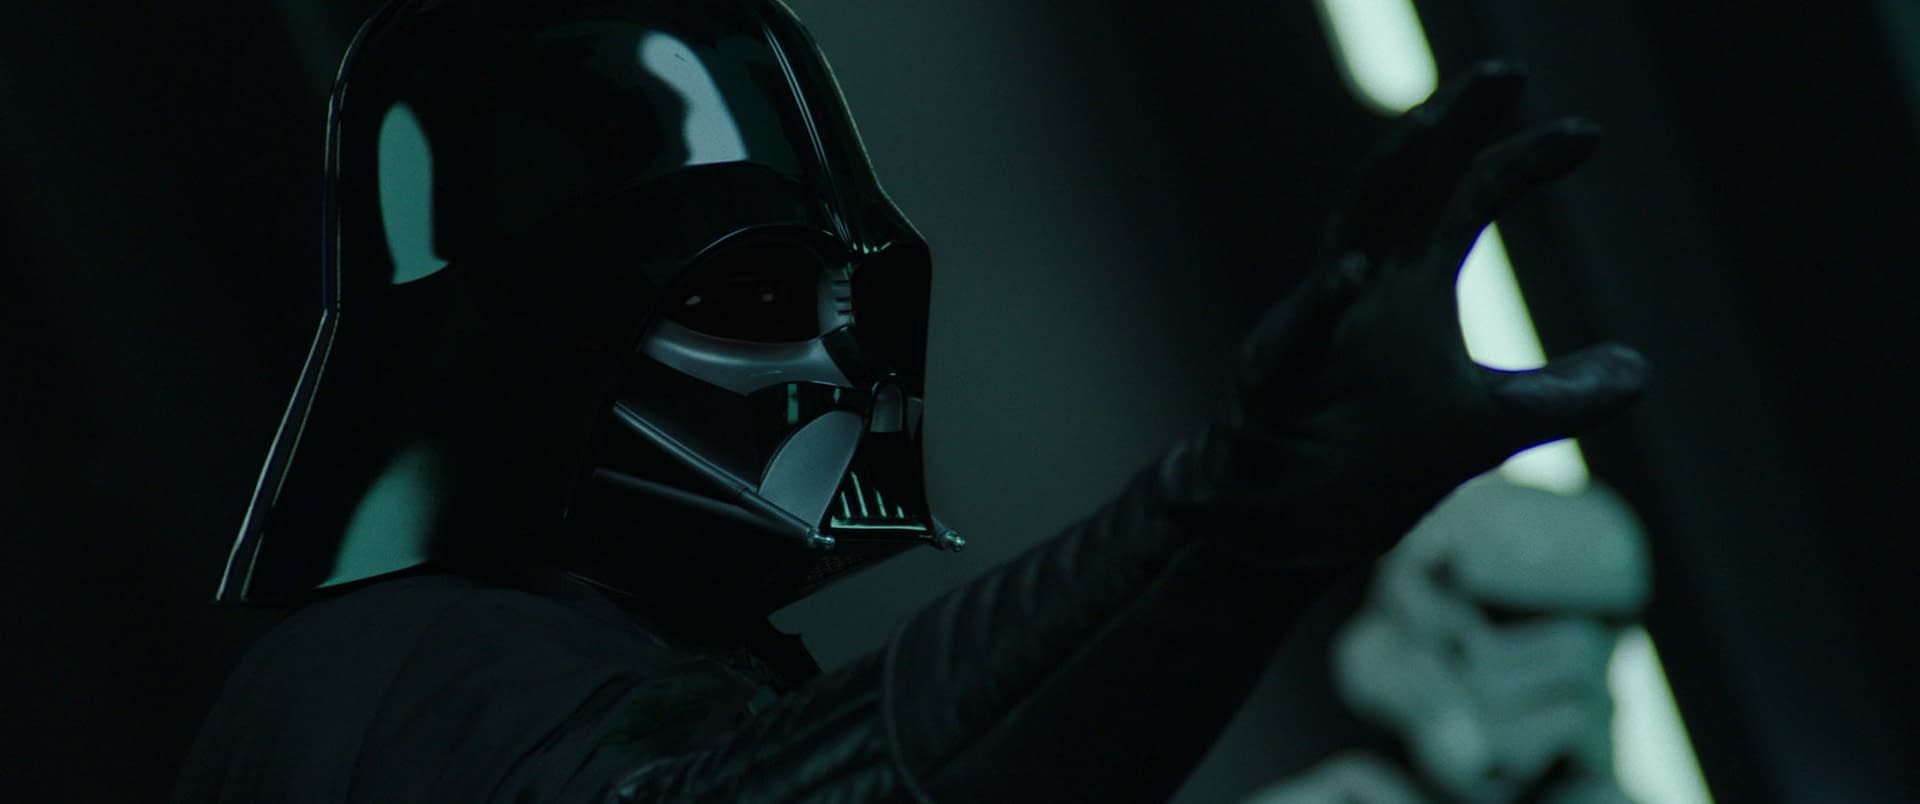 Star Wars' Moses Ingram Reveals Her Marvel Cinematic Universe Hopes